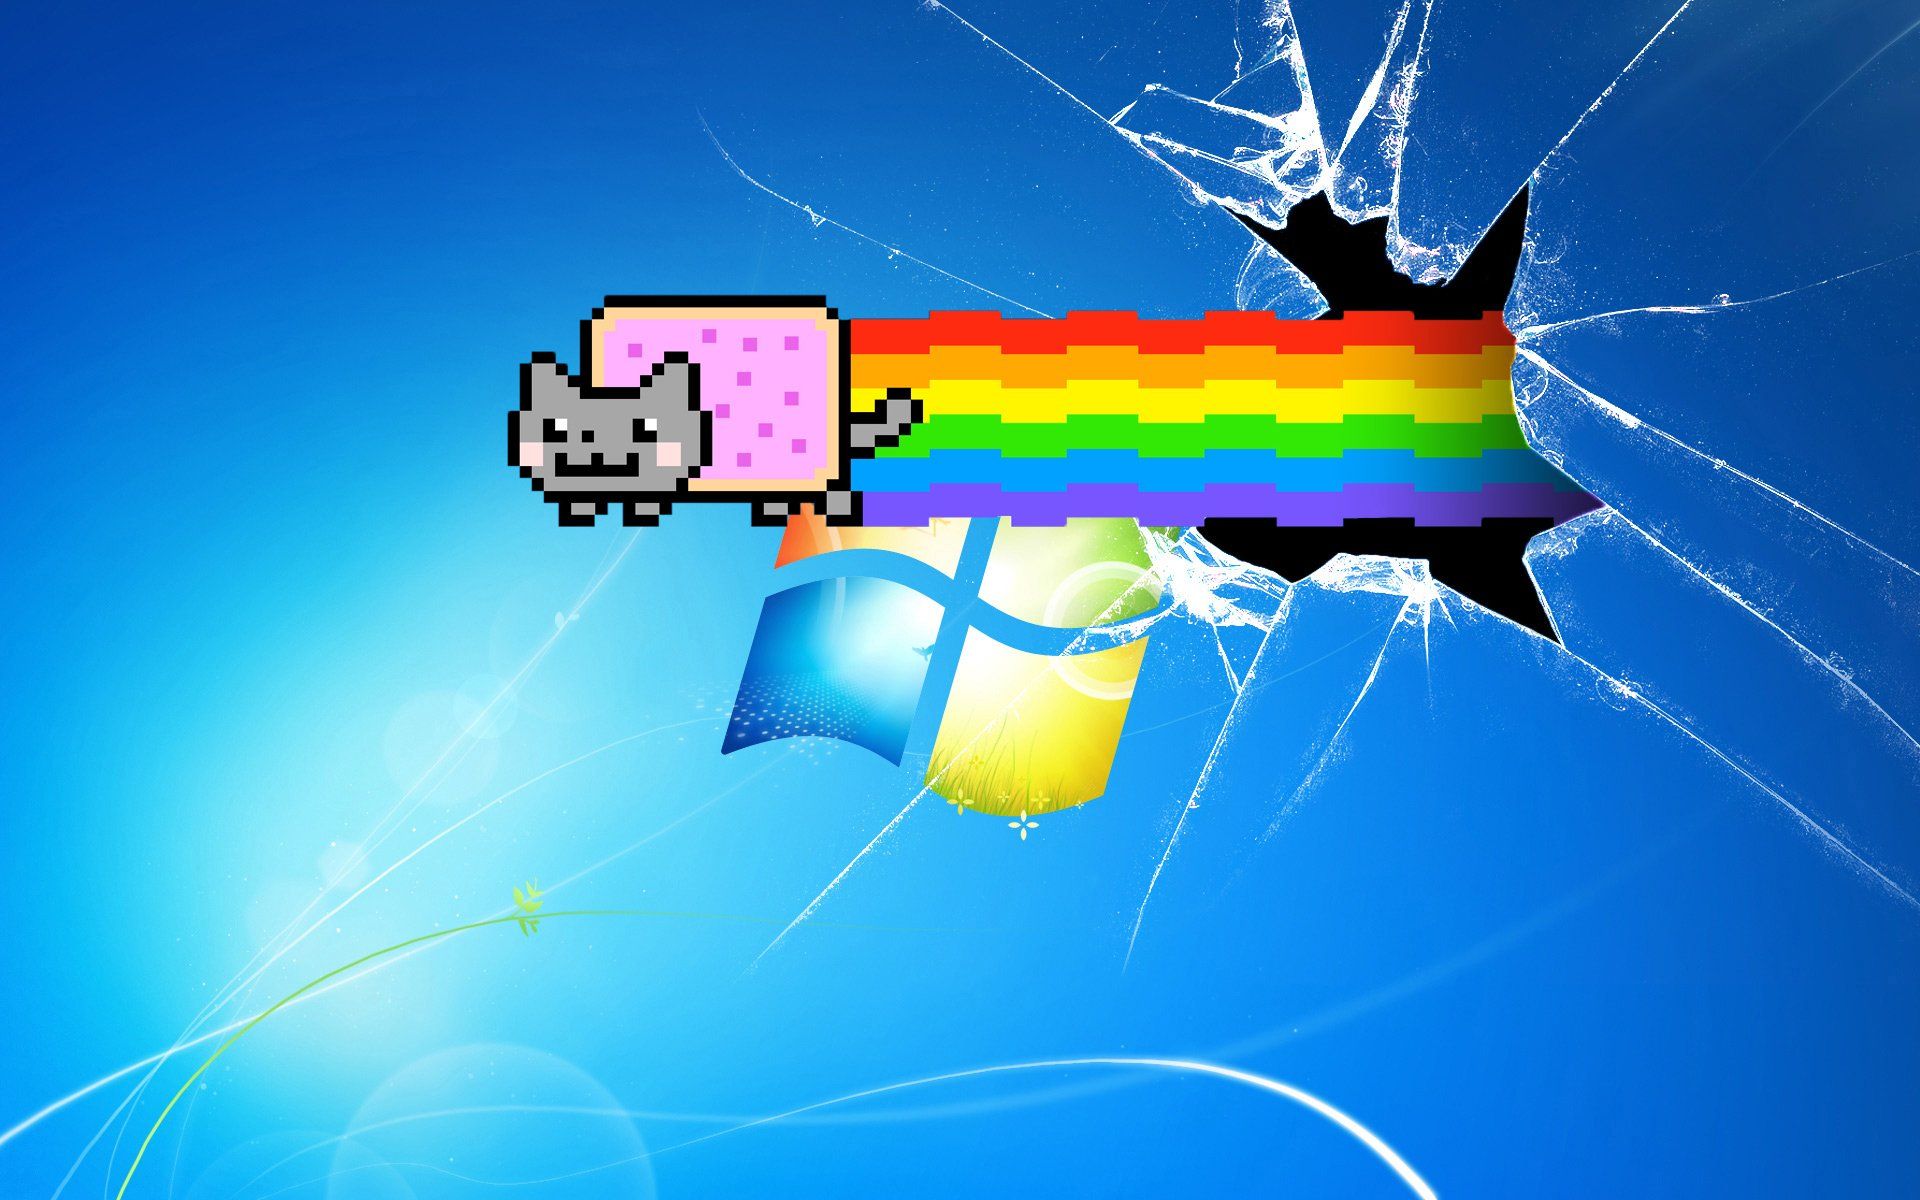 Nyan Cat Wallpaper Free Download. Broken screen wallpaper, Computer screen wallpaper, Desktop wallpaper background